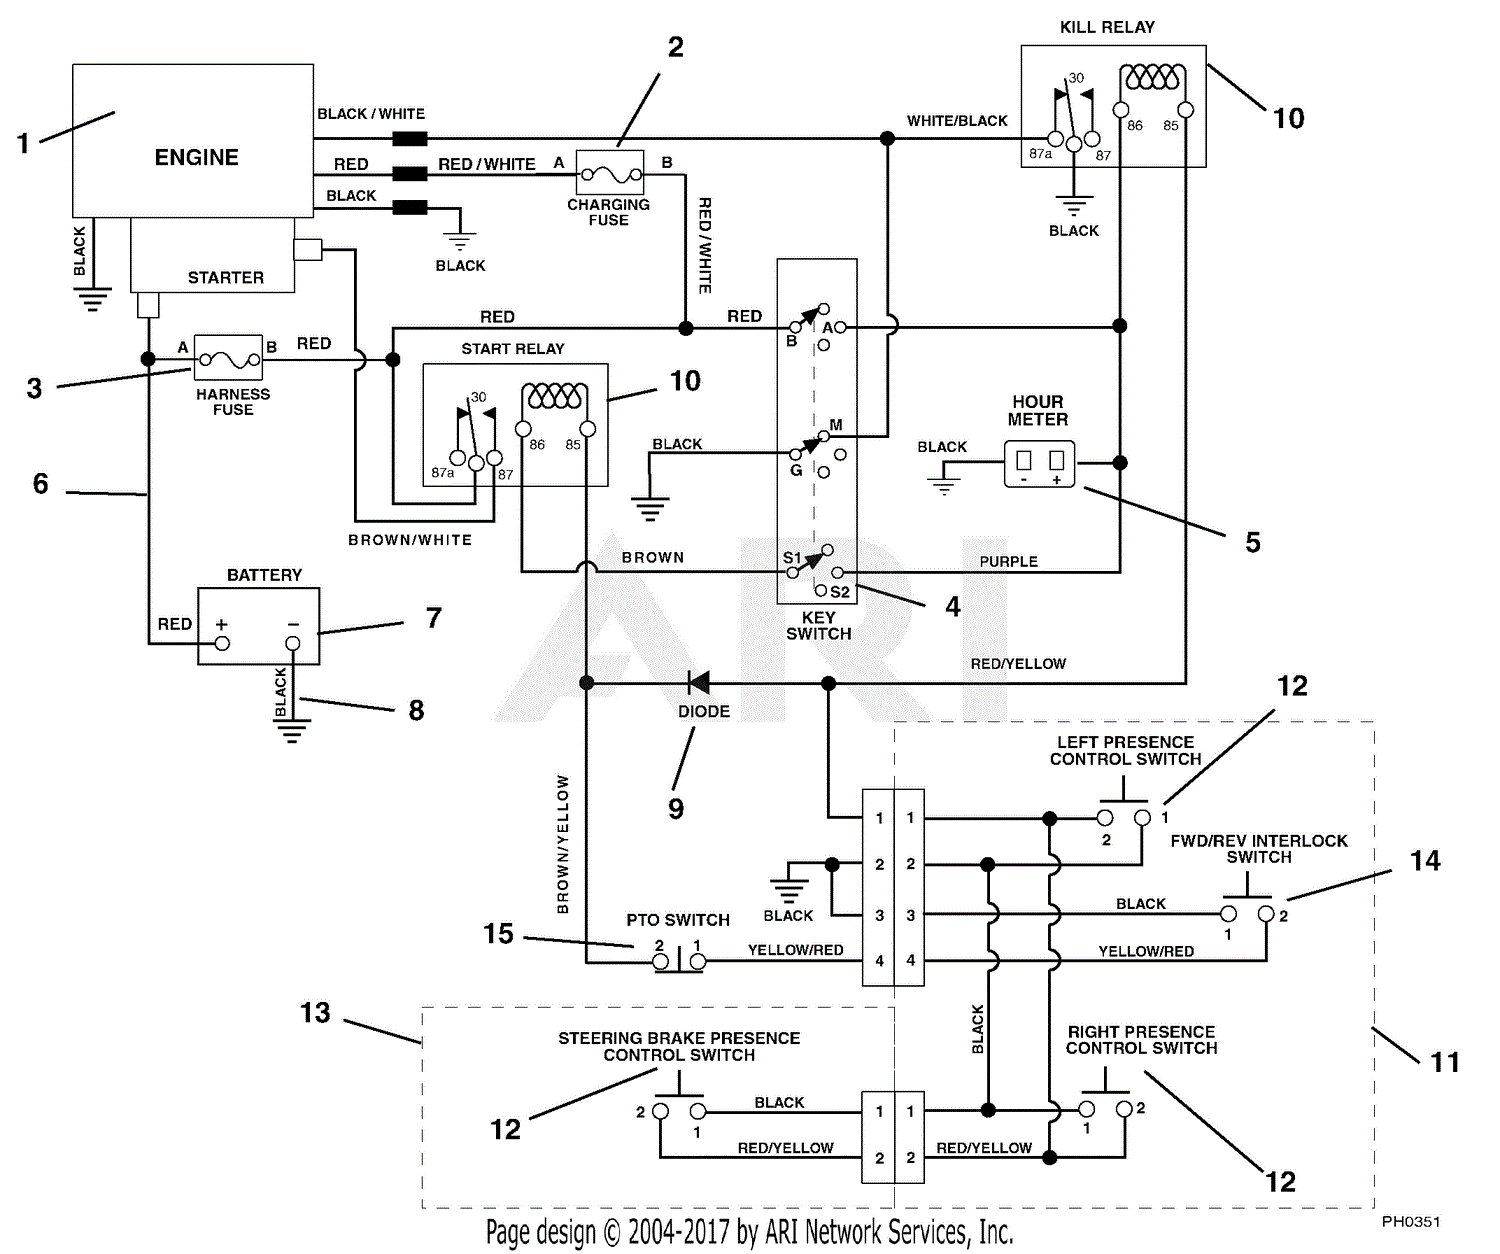 Kohler 12 Hp Wiring Diagram